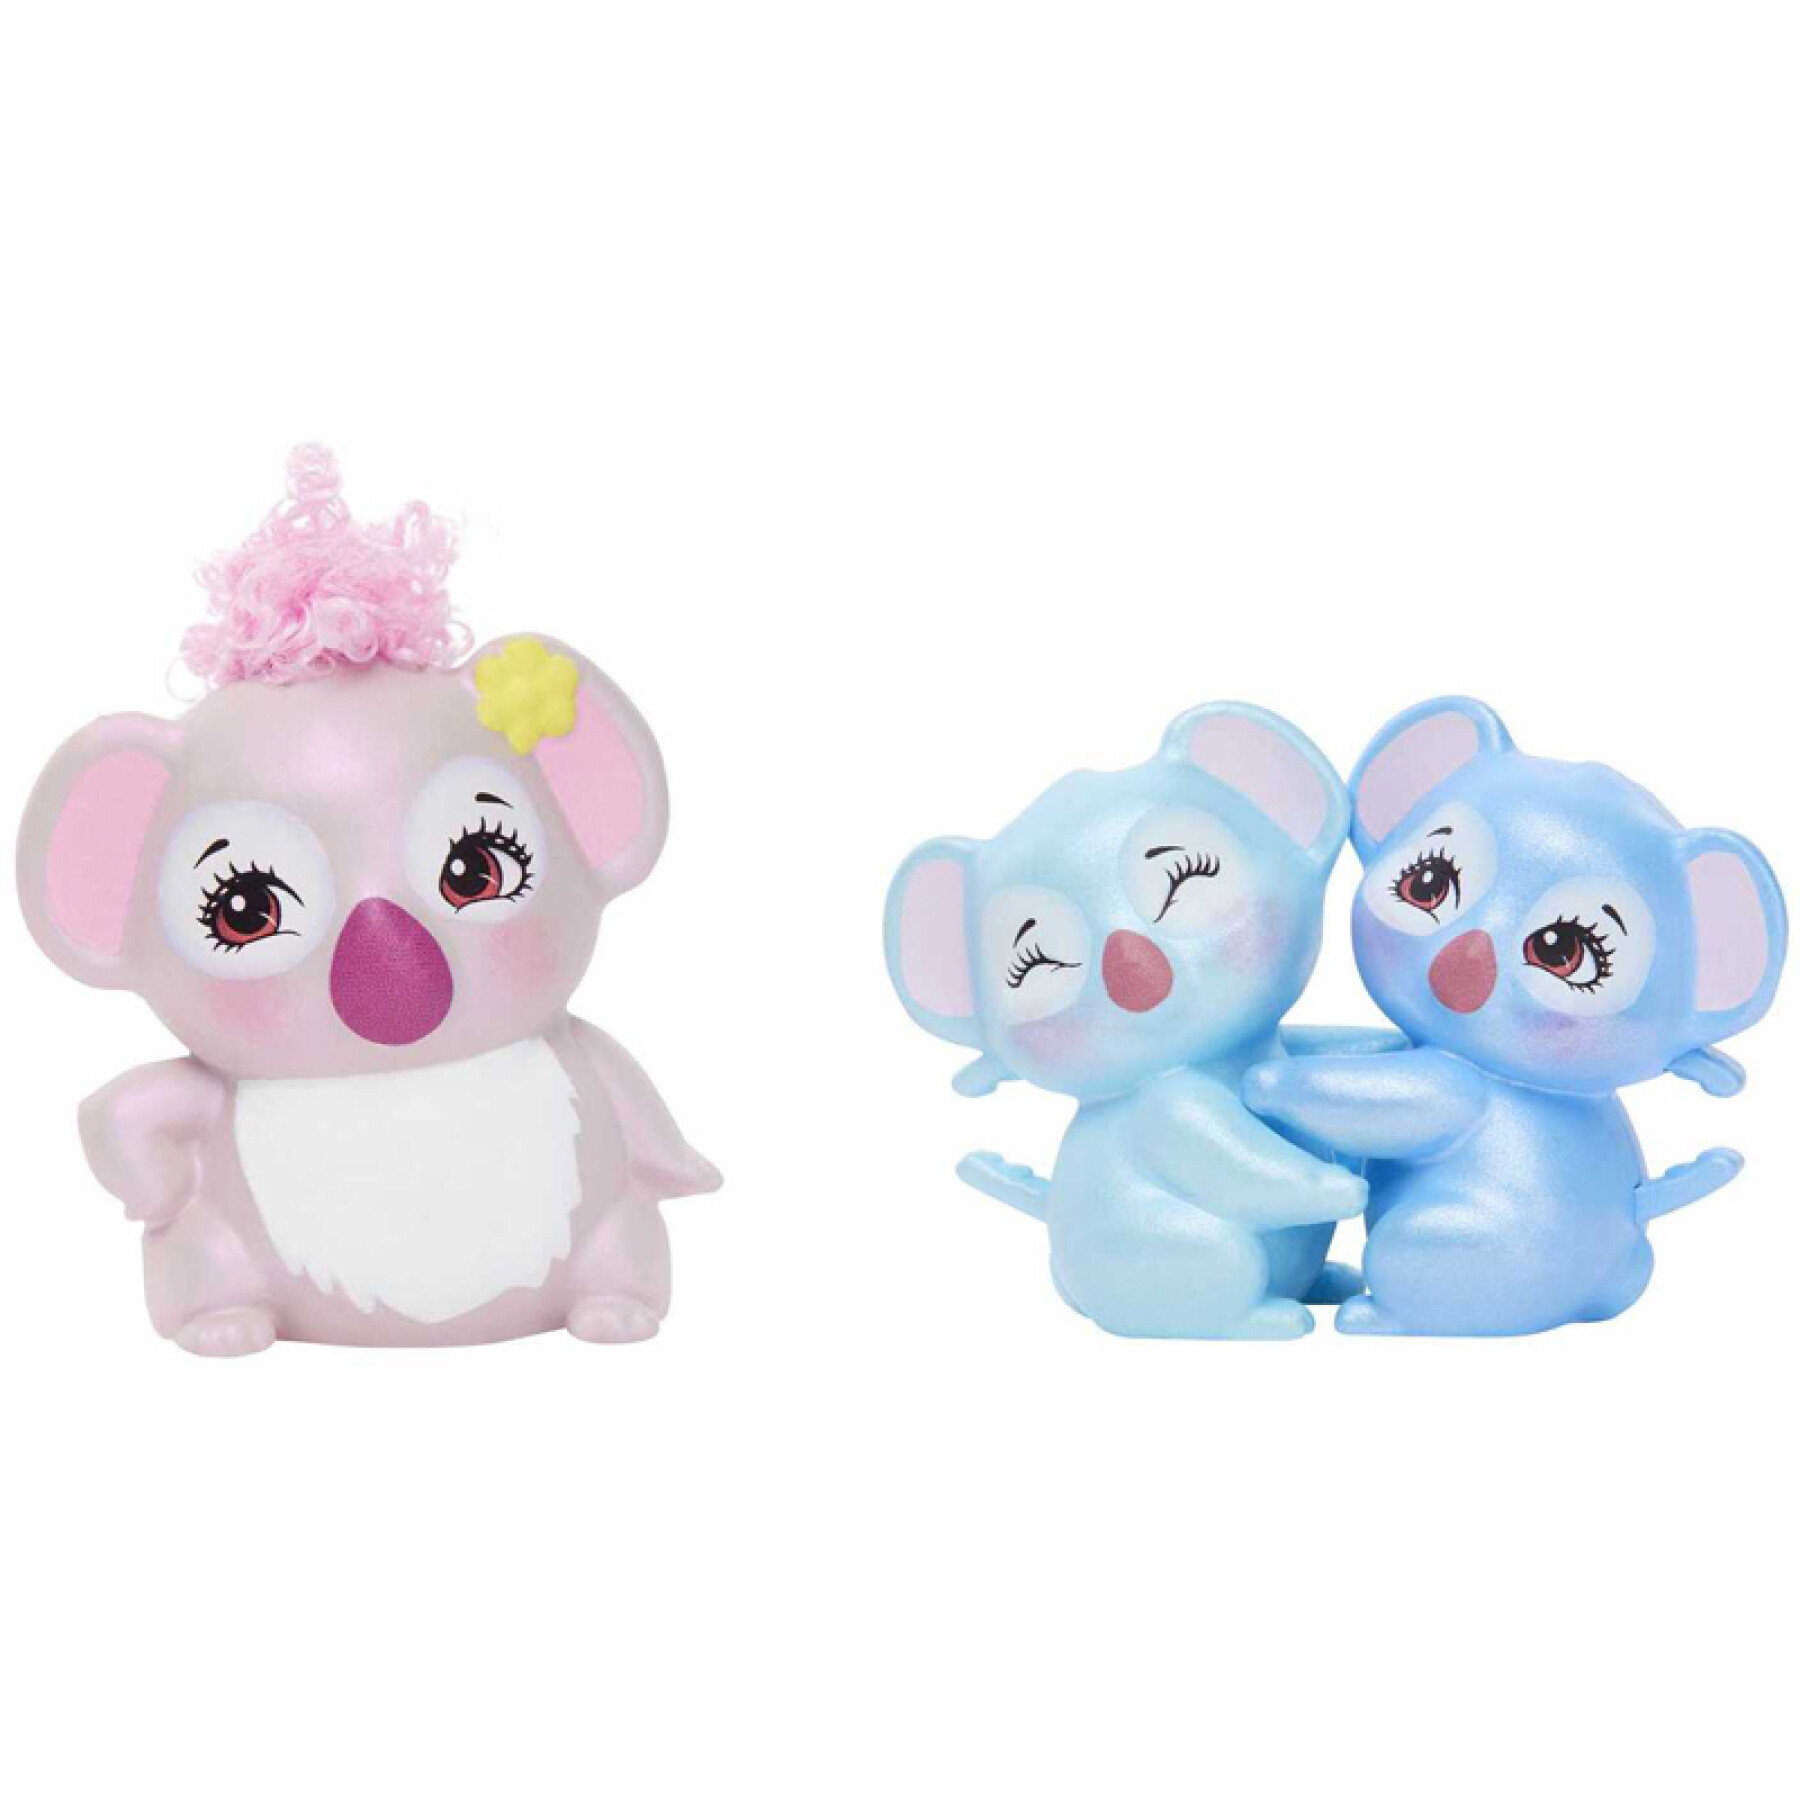 Puppe Familie Koala Mattel France Enchantimals